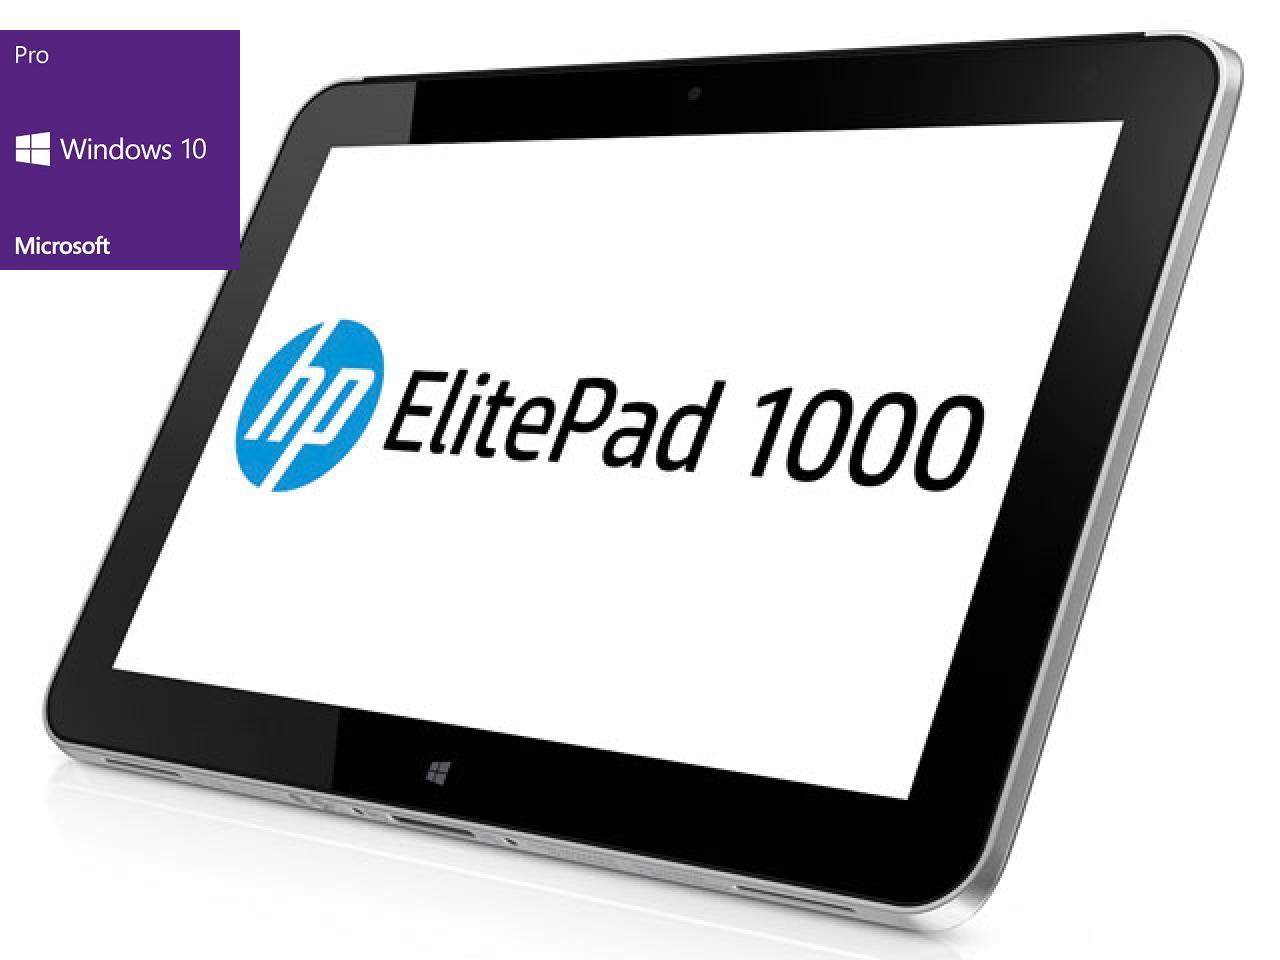 HP ElitePad 1000 G2  - shop.bb-net.de